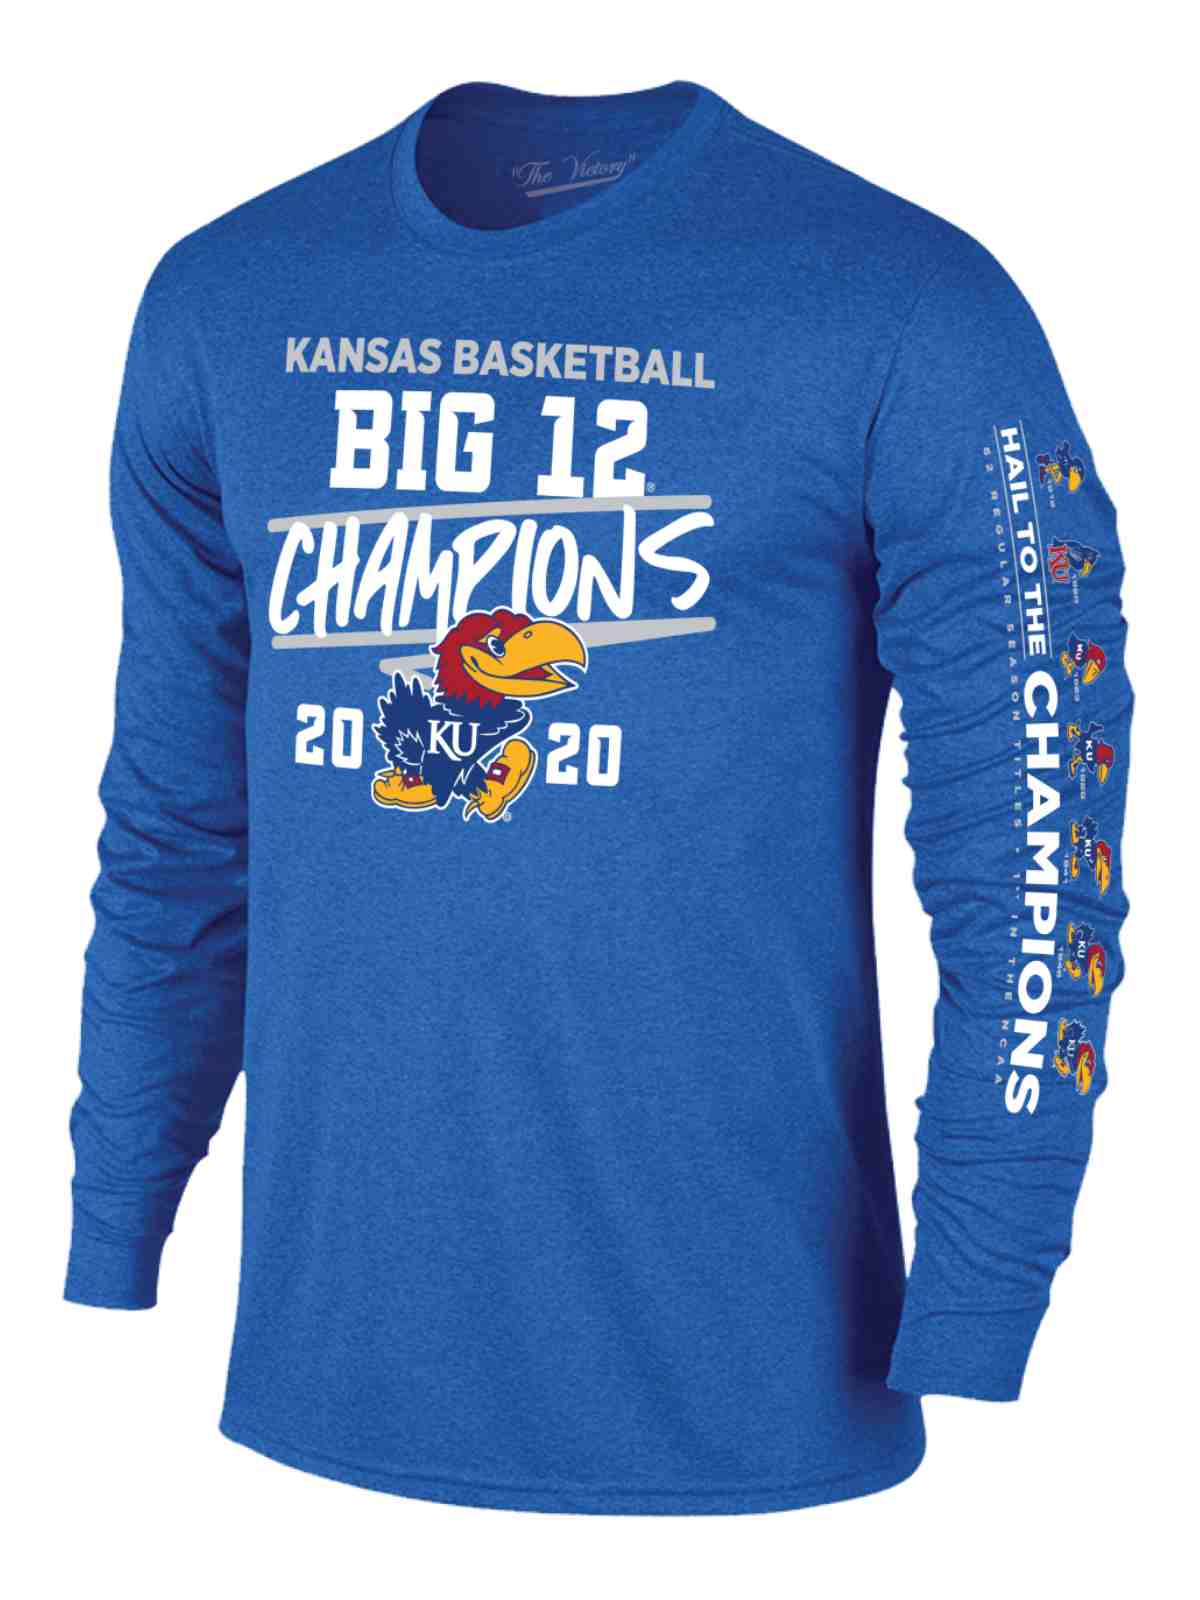 The Victory Kansas Jayhawks 2020 BIG 12 Basketball Champions Blue Long Sleeve T-Shirt